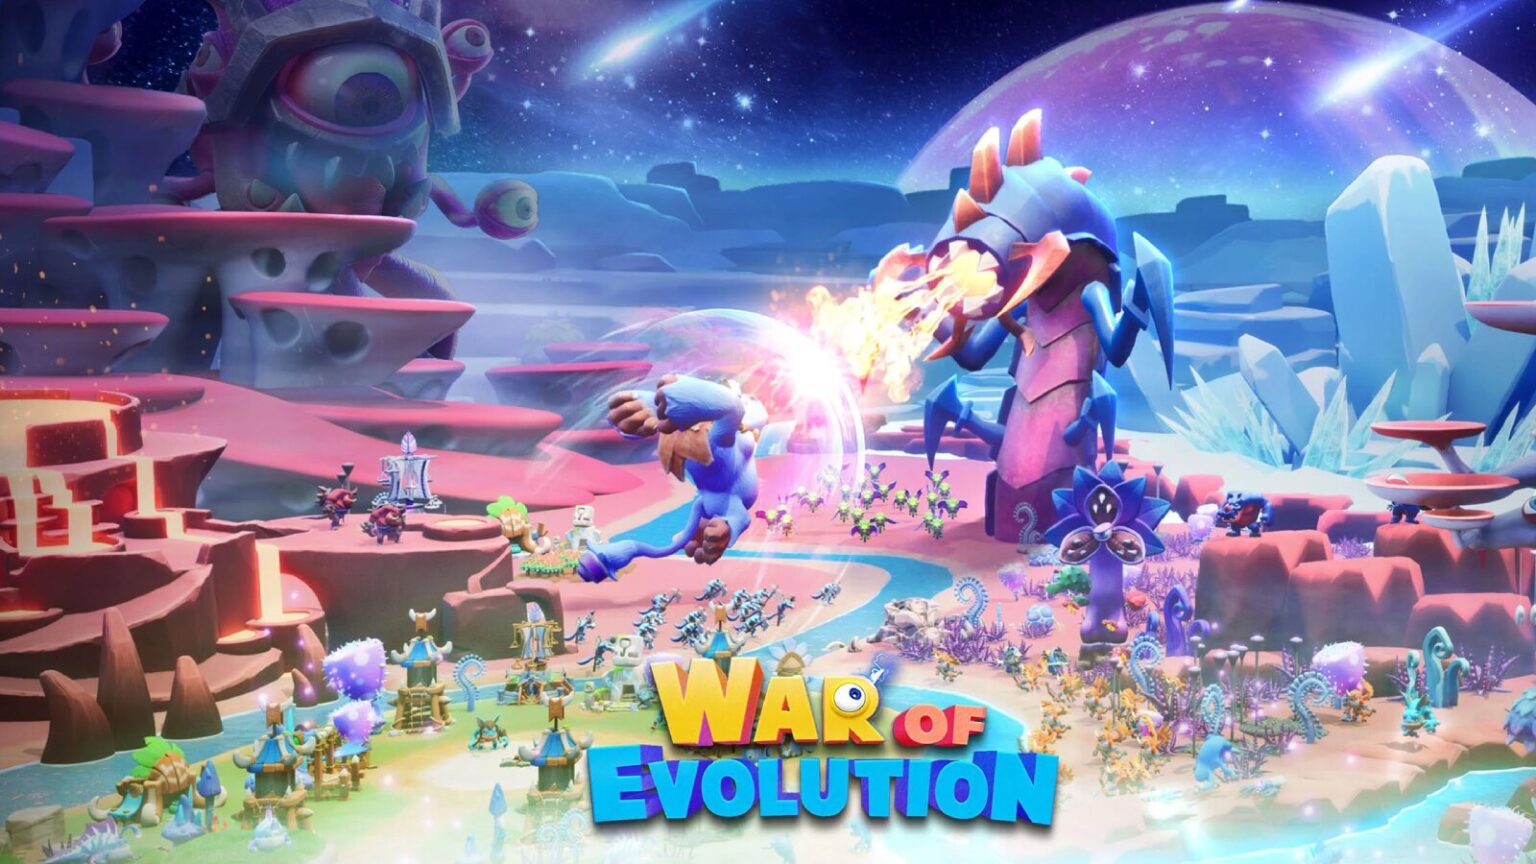 Colorful alien creatures battle in War of Evolution game